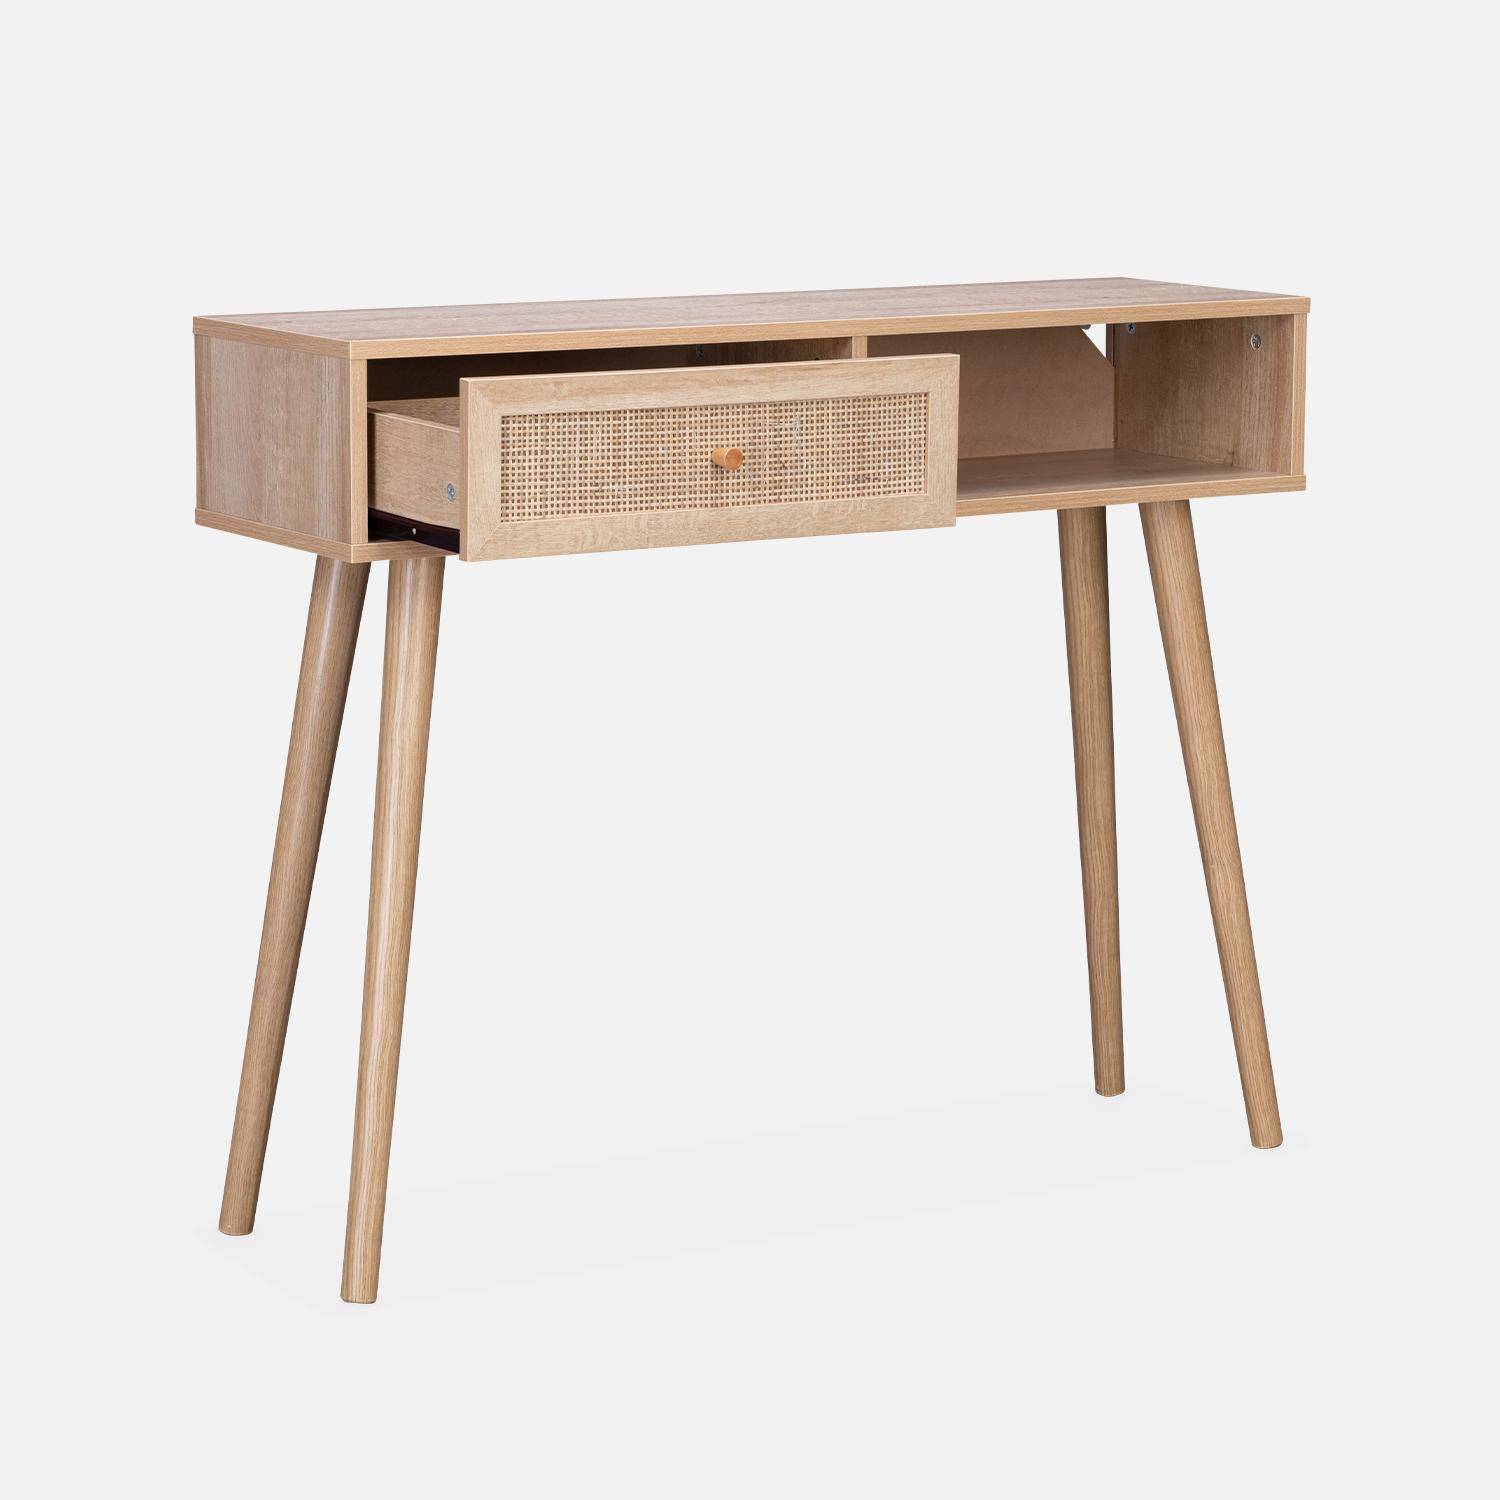 Wood and cane rattan Scandi-style console table, 100x30x81cm - Boheme - Natural wood colour,sweeek,Photo4